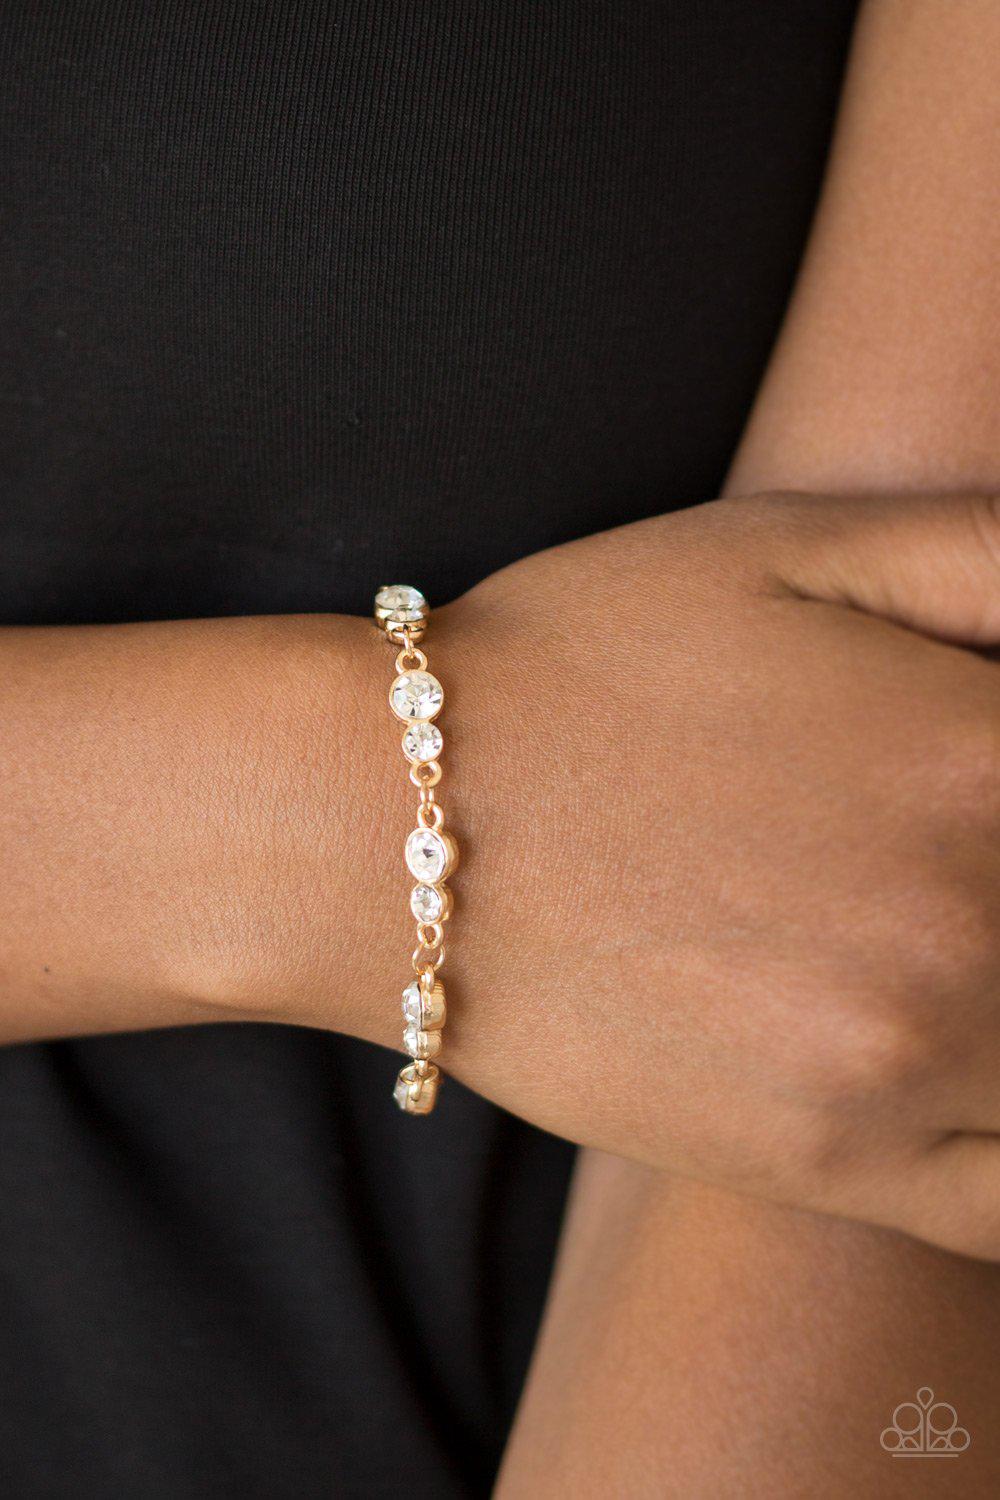 Twinkle Twinkle Little Starlet Gold Bracelet - Paparazzi Accessories-CarasShop.com - $5 Jewelry by Cara Jewels